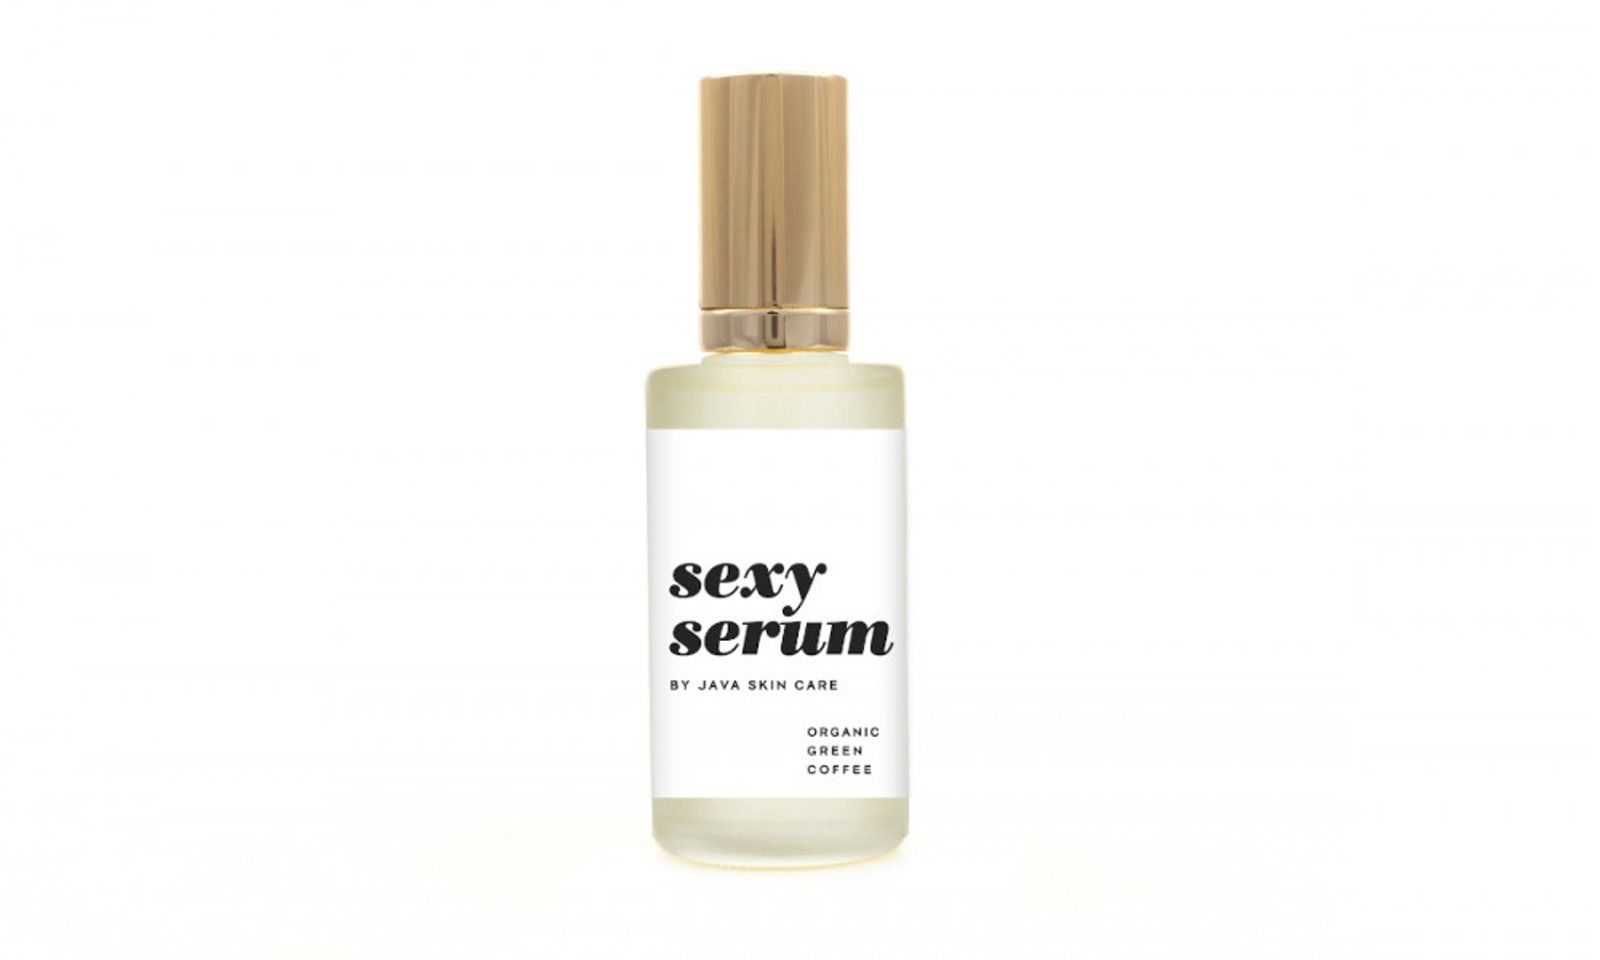 Entrenue Named Exclusive U.S. Distributor of ‘Sexy Serum’